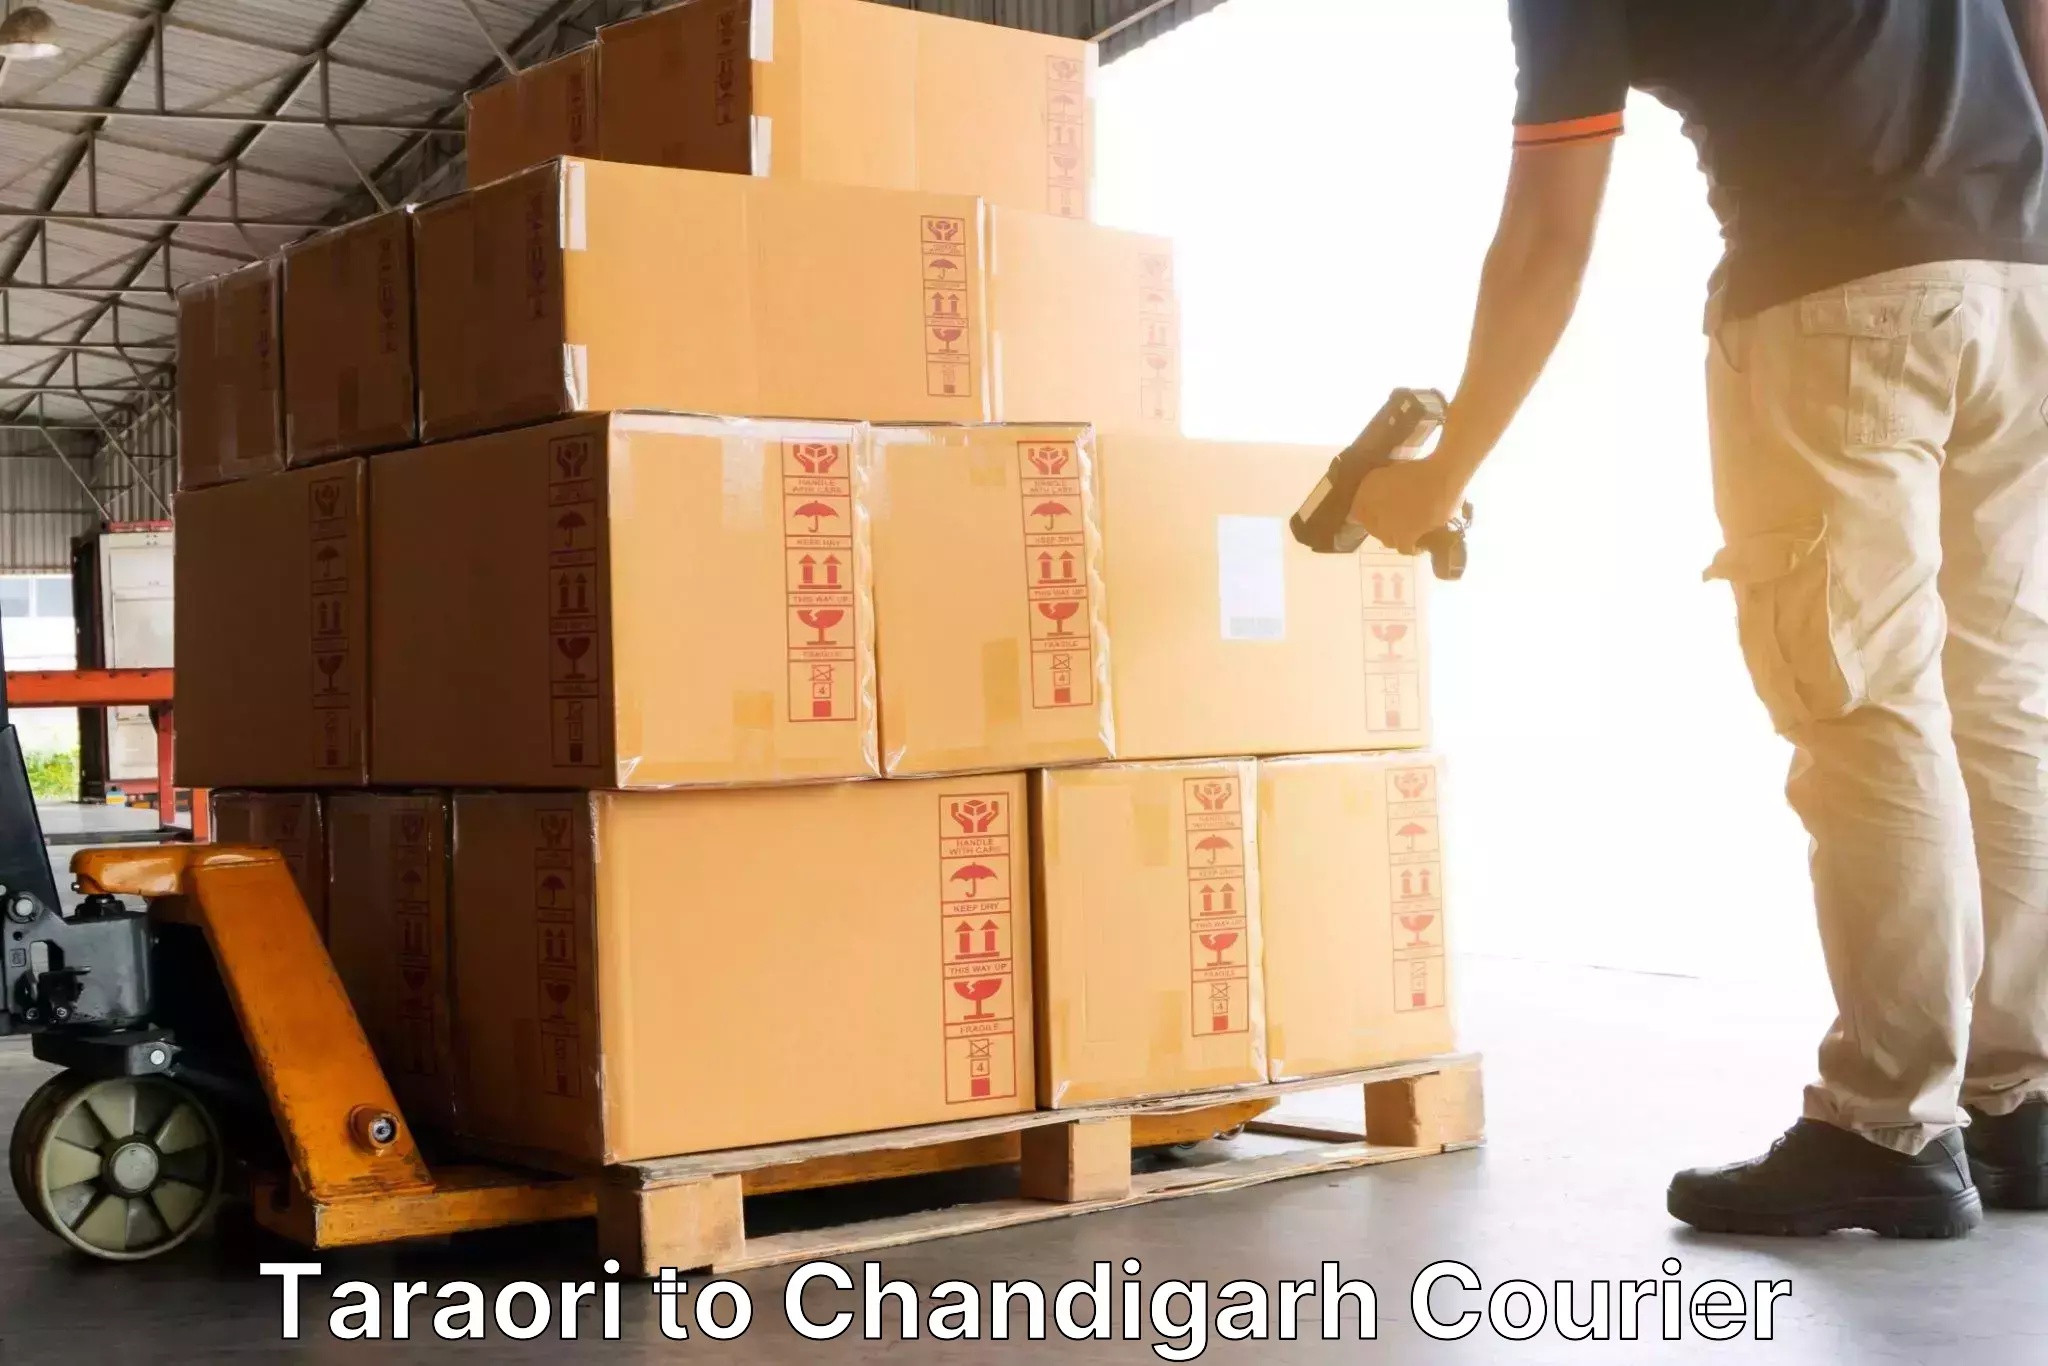 Courier service booking in Taraori to Chandigarh